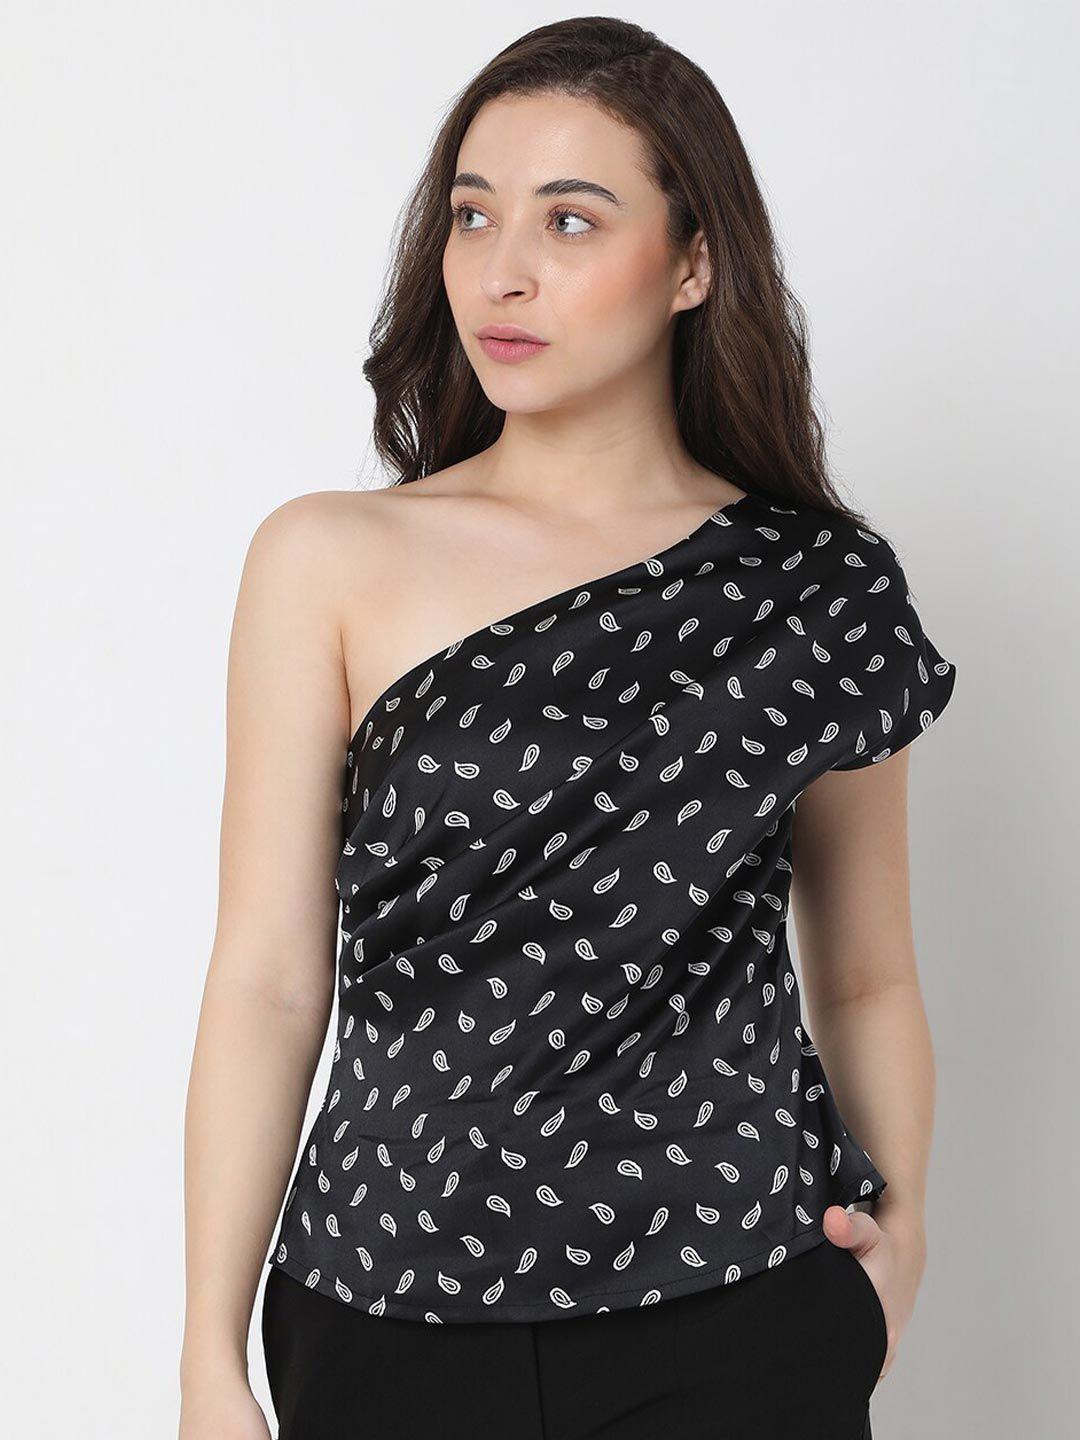 vero-moda-black-&-white-geometric-printed-one-shoulder-top